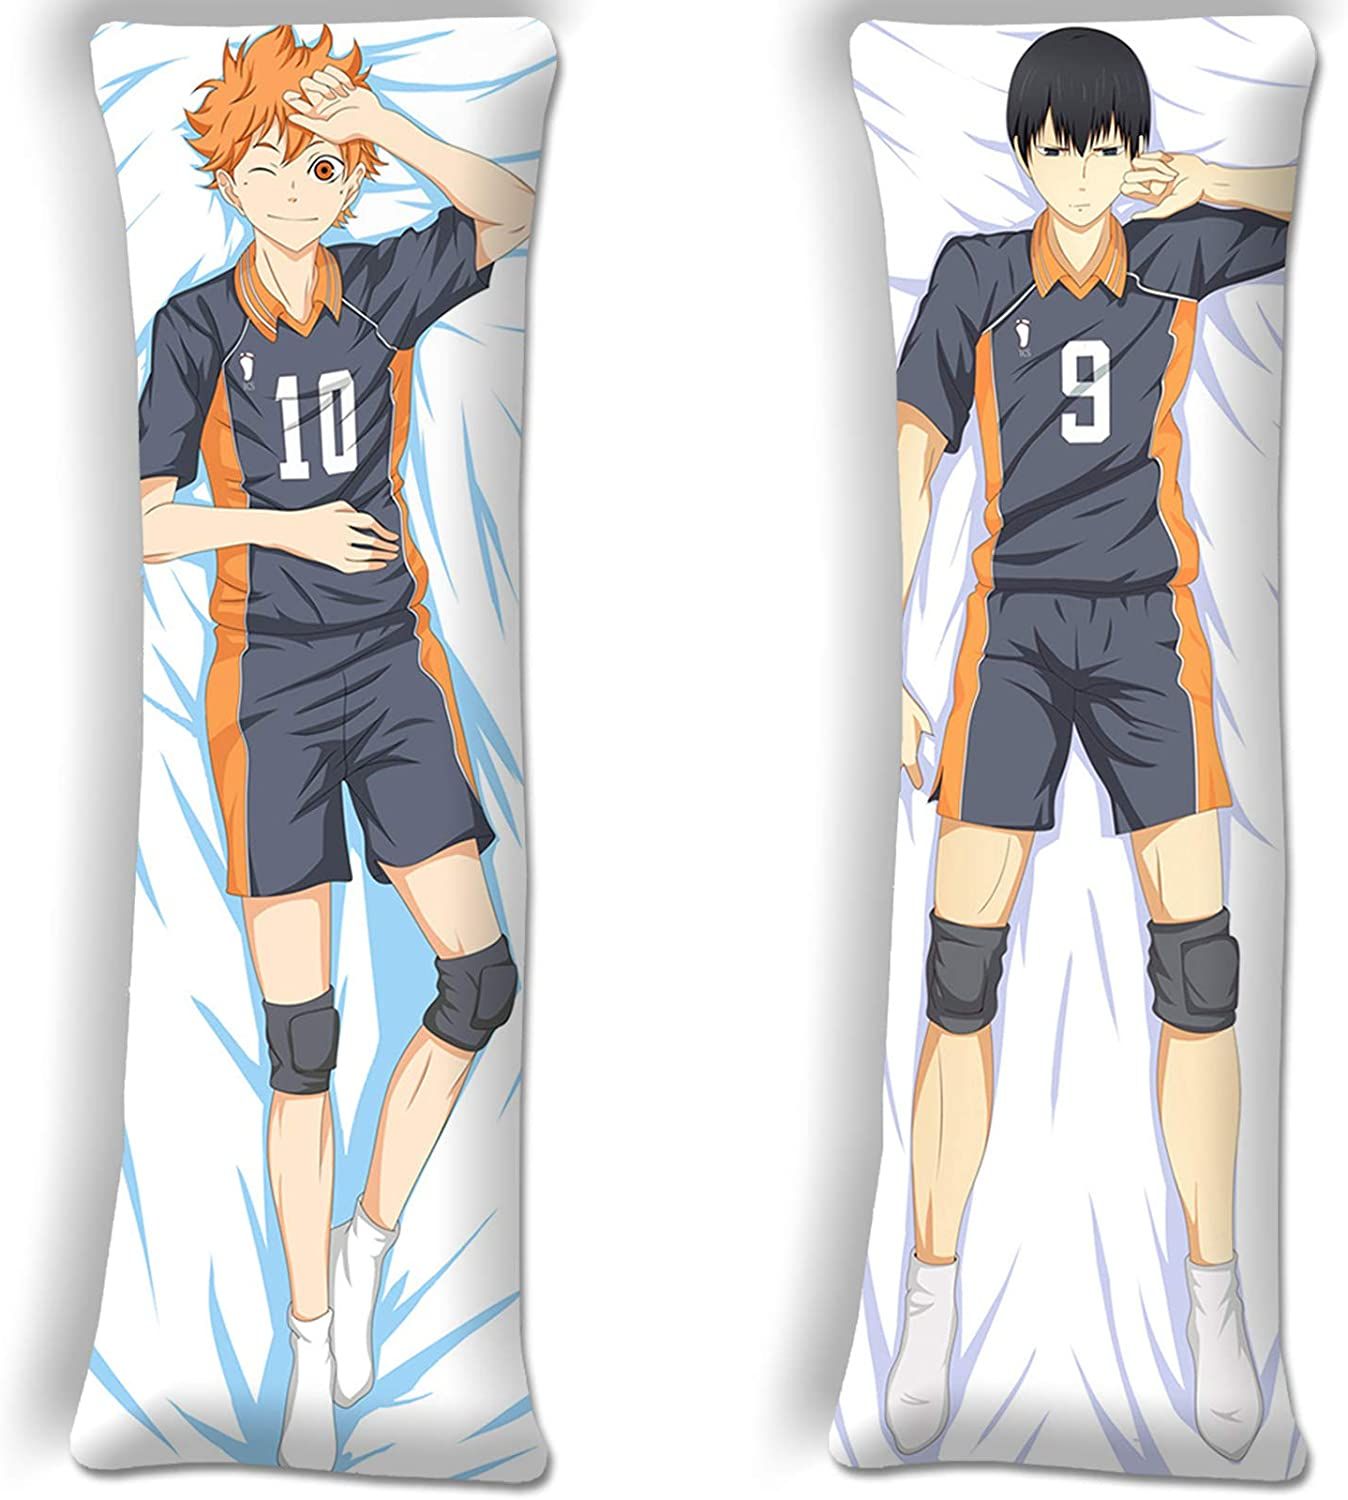 Haikyuu Kuroo Tetsurou Dakimakura Anime Body Pillow Cover 150cm X 50cm 59 Inch X 19 6 Inch Cosplay Gift Peach Skin Pillowcase Uk 2021 From Anime1990 Gbp 34 08 Dhgate Uk